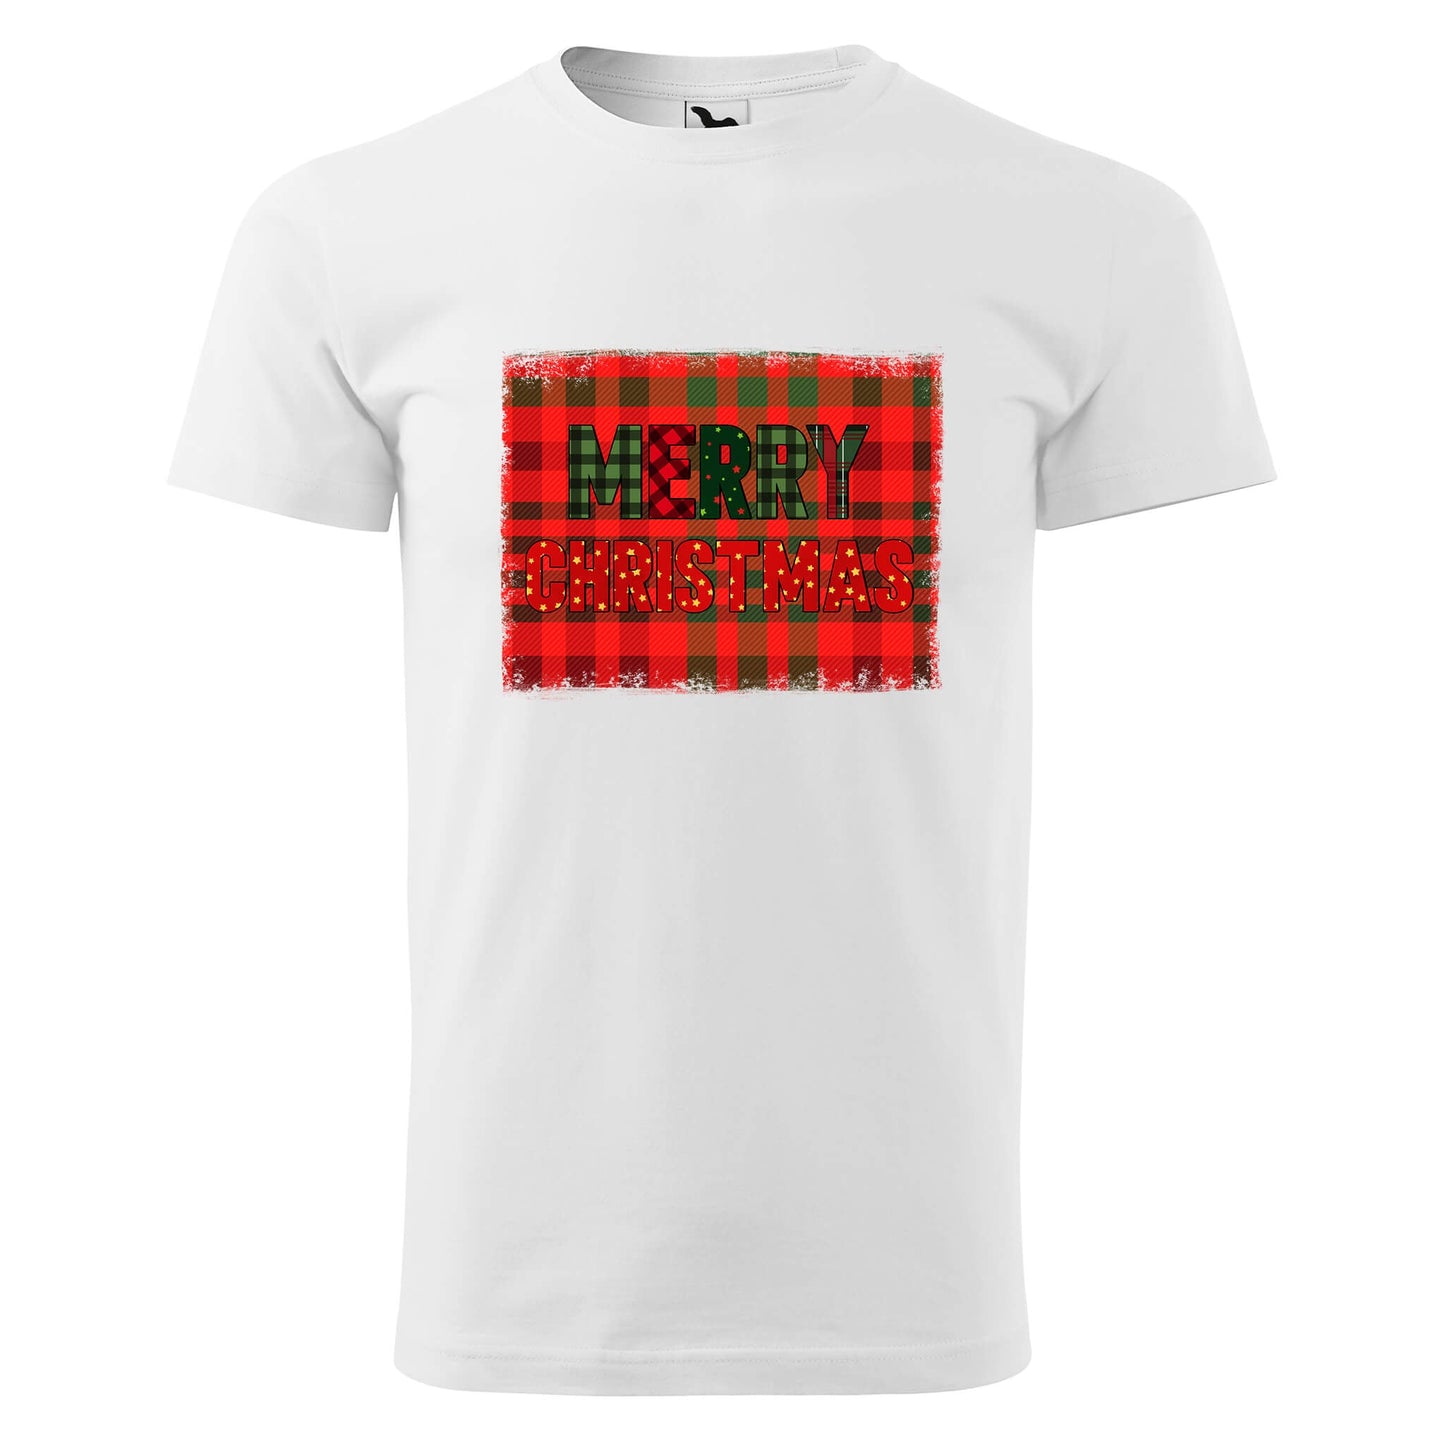 Merry christmas4 t-shirt - rvdesignprint